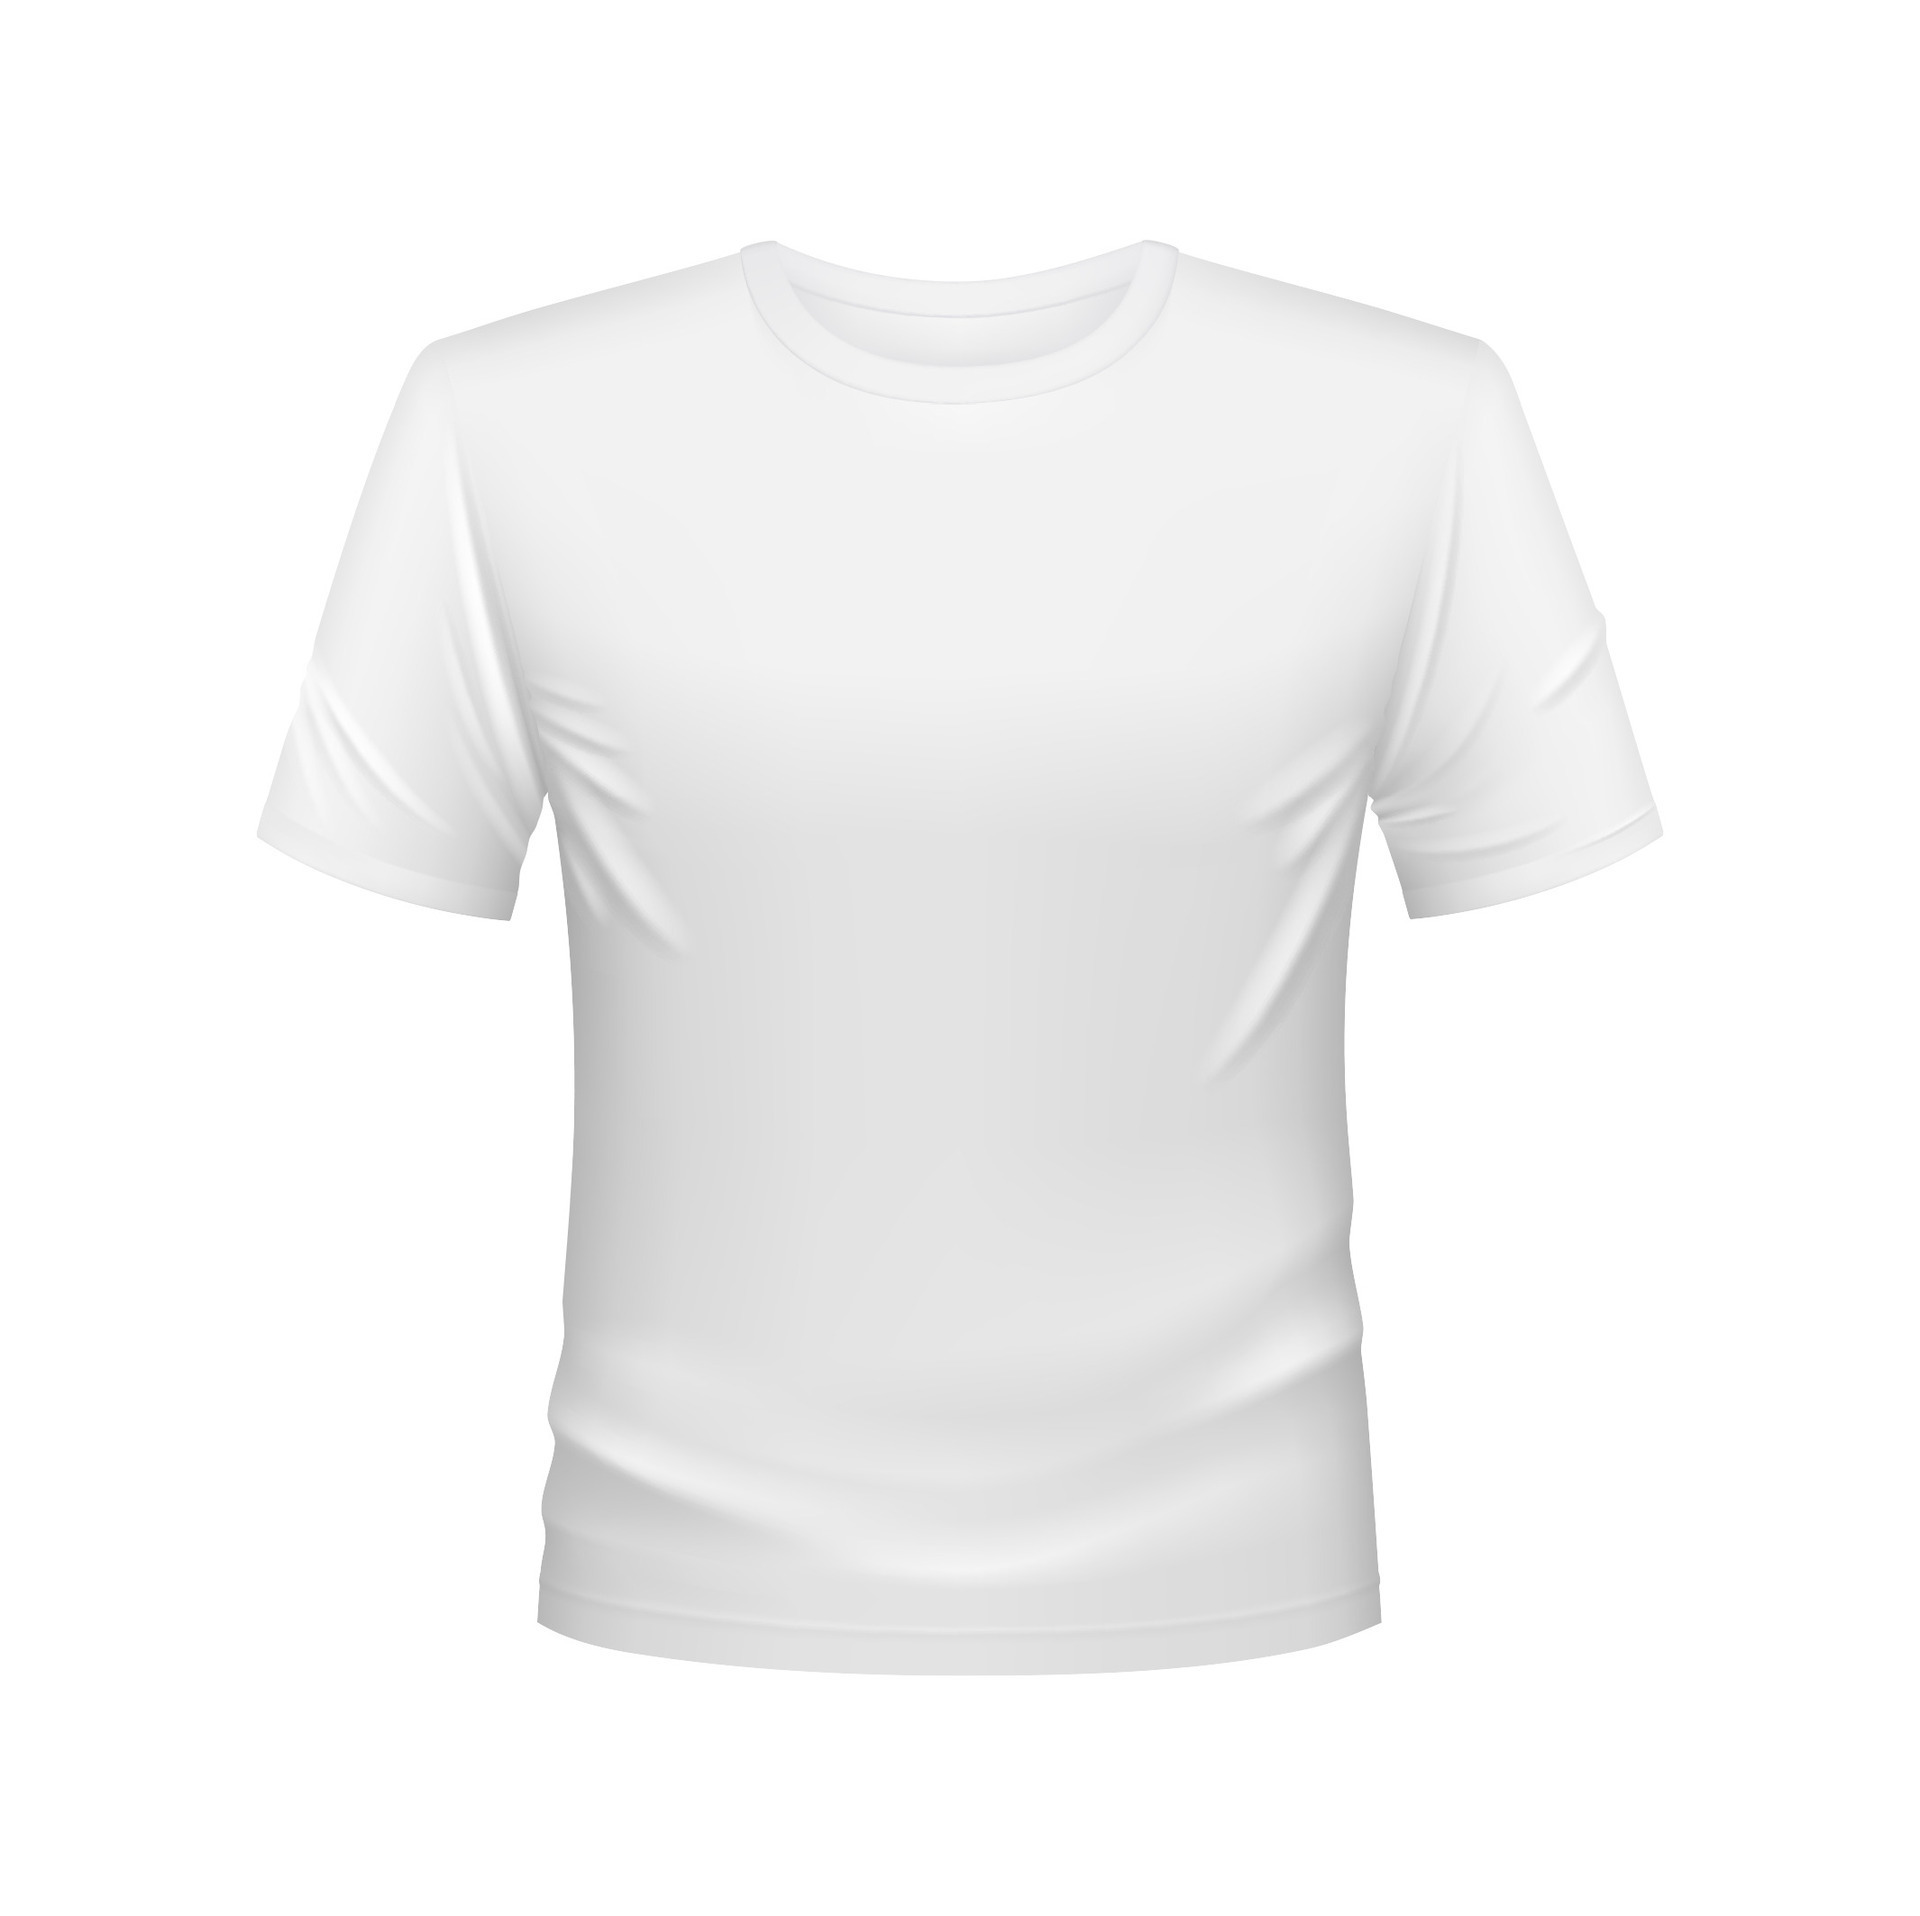 White tshirt for men isolated 3d vector mockup 26365526 Vector Art at ...